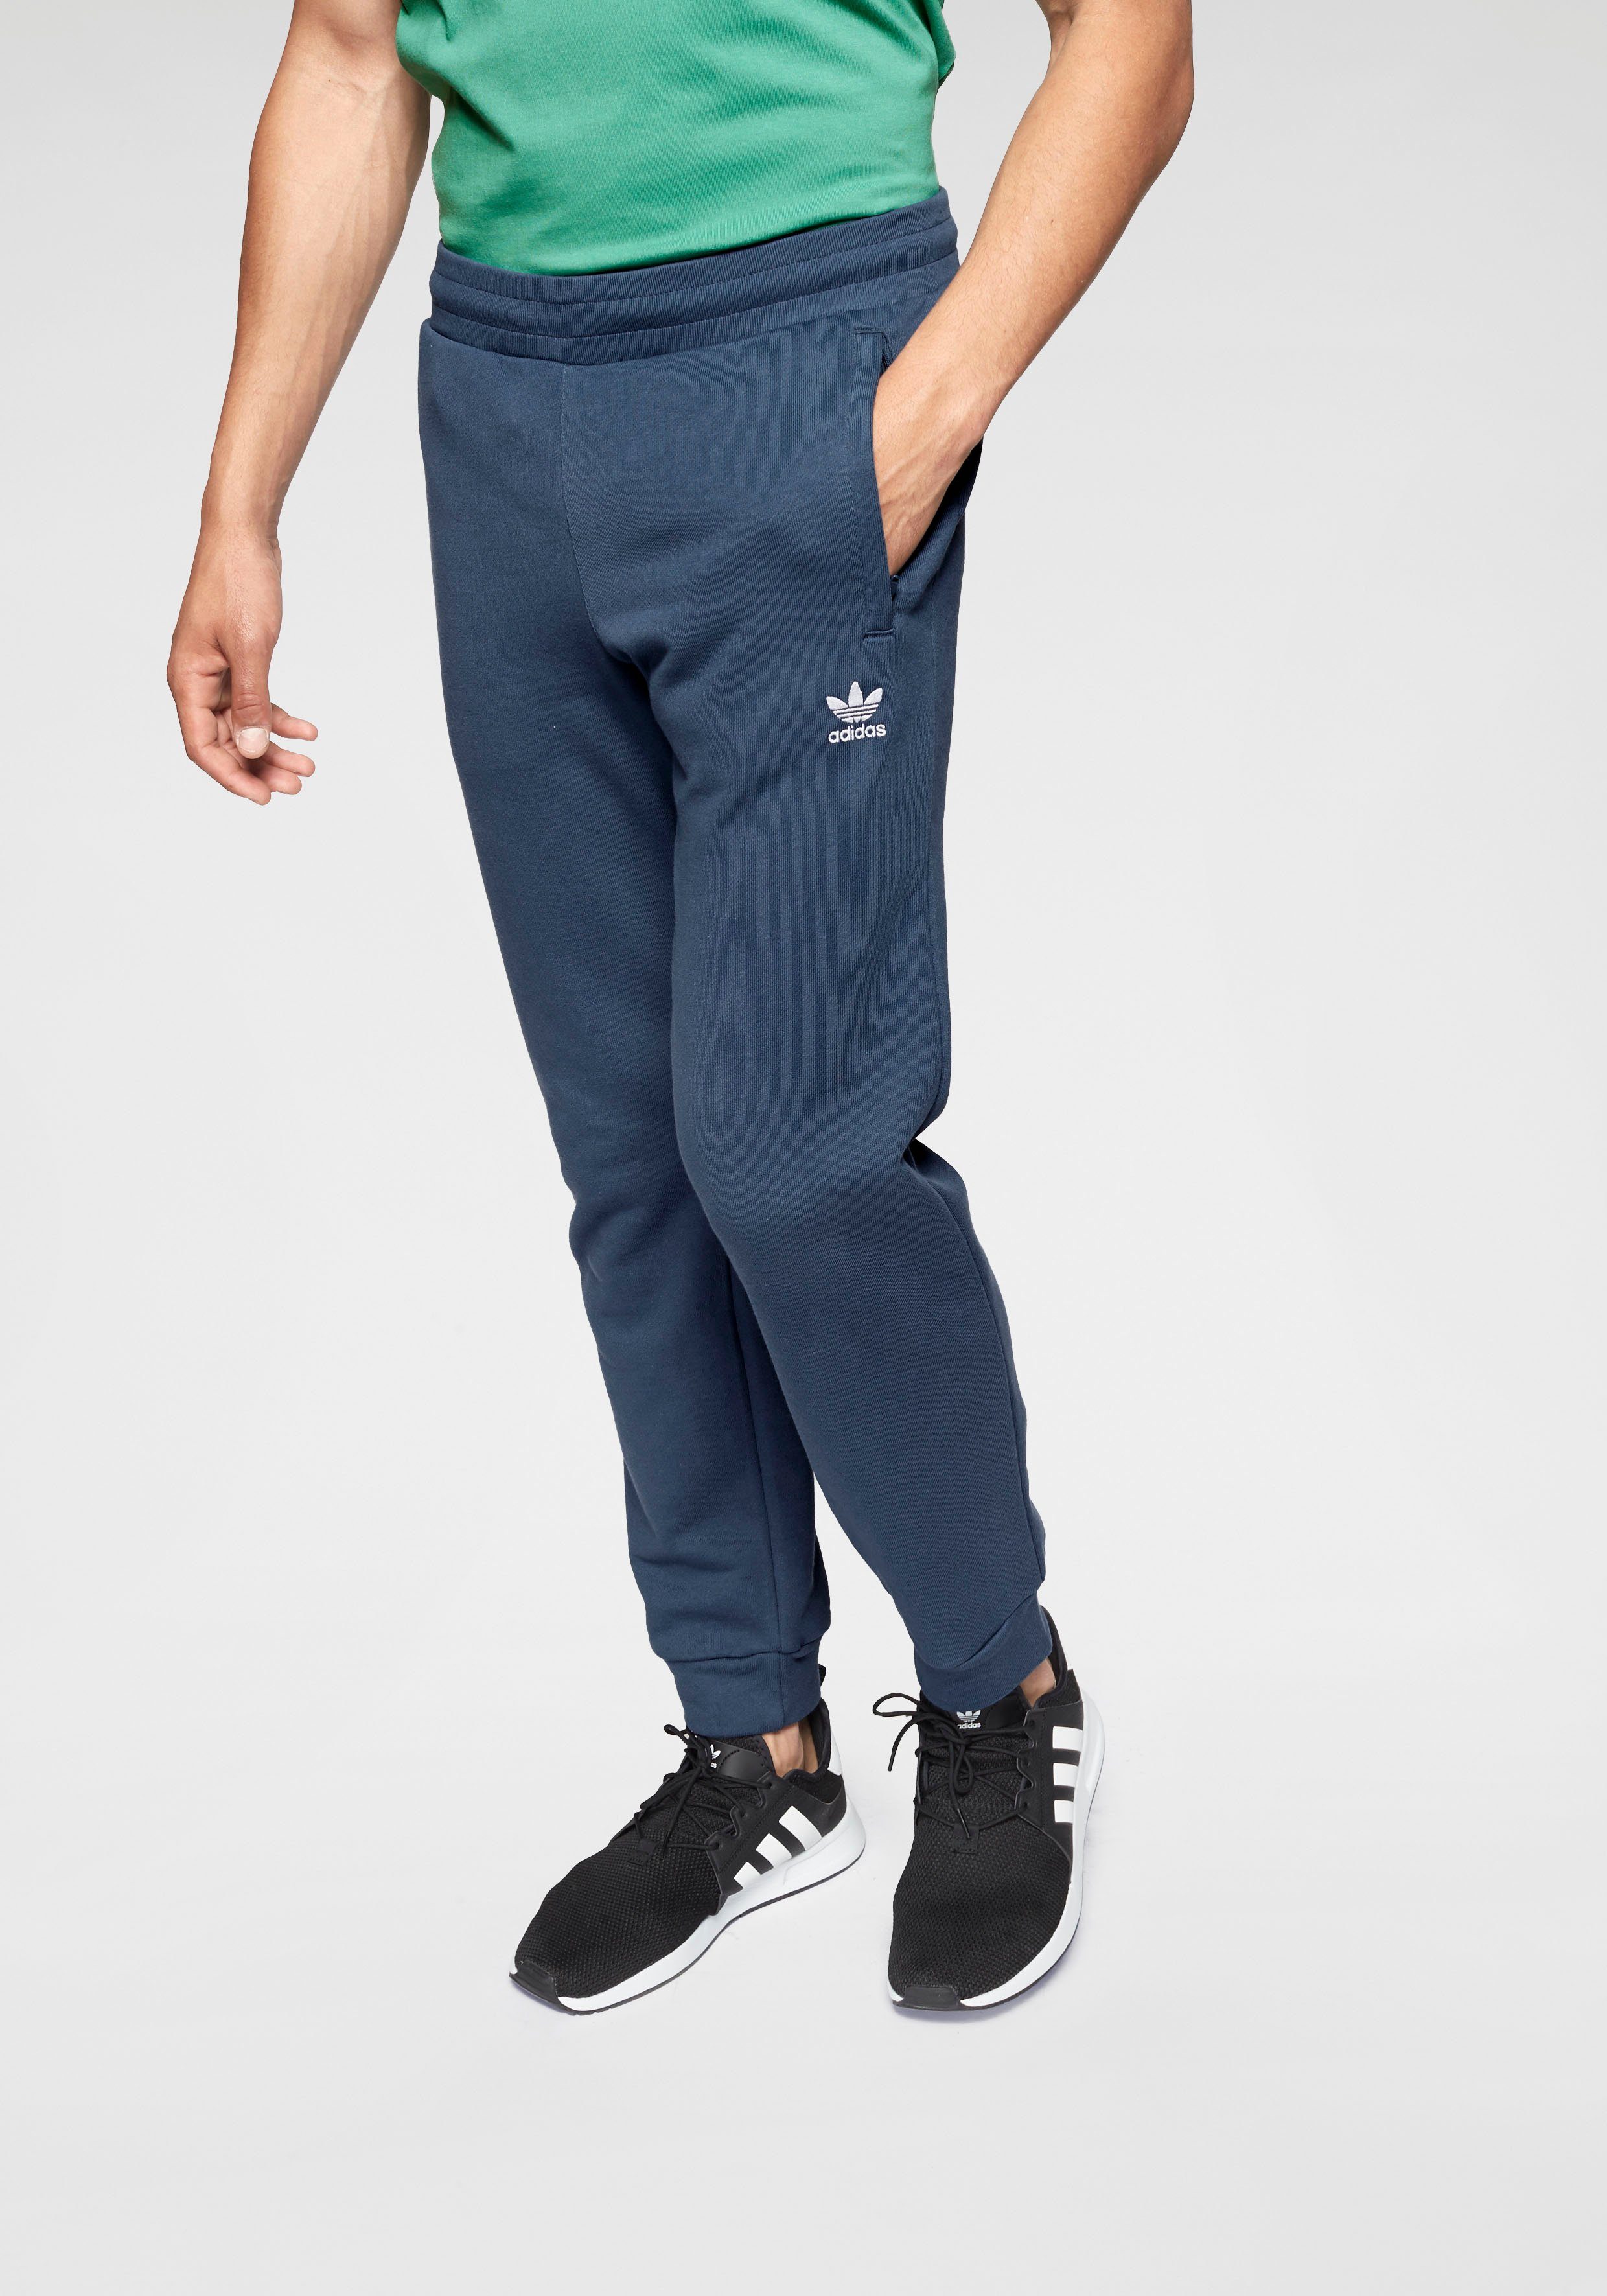 adidas Originals Jogginghose »TREFOIL PANT« kaufen | OTTO